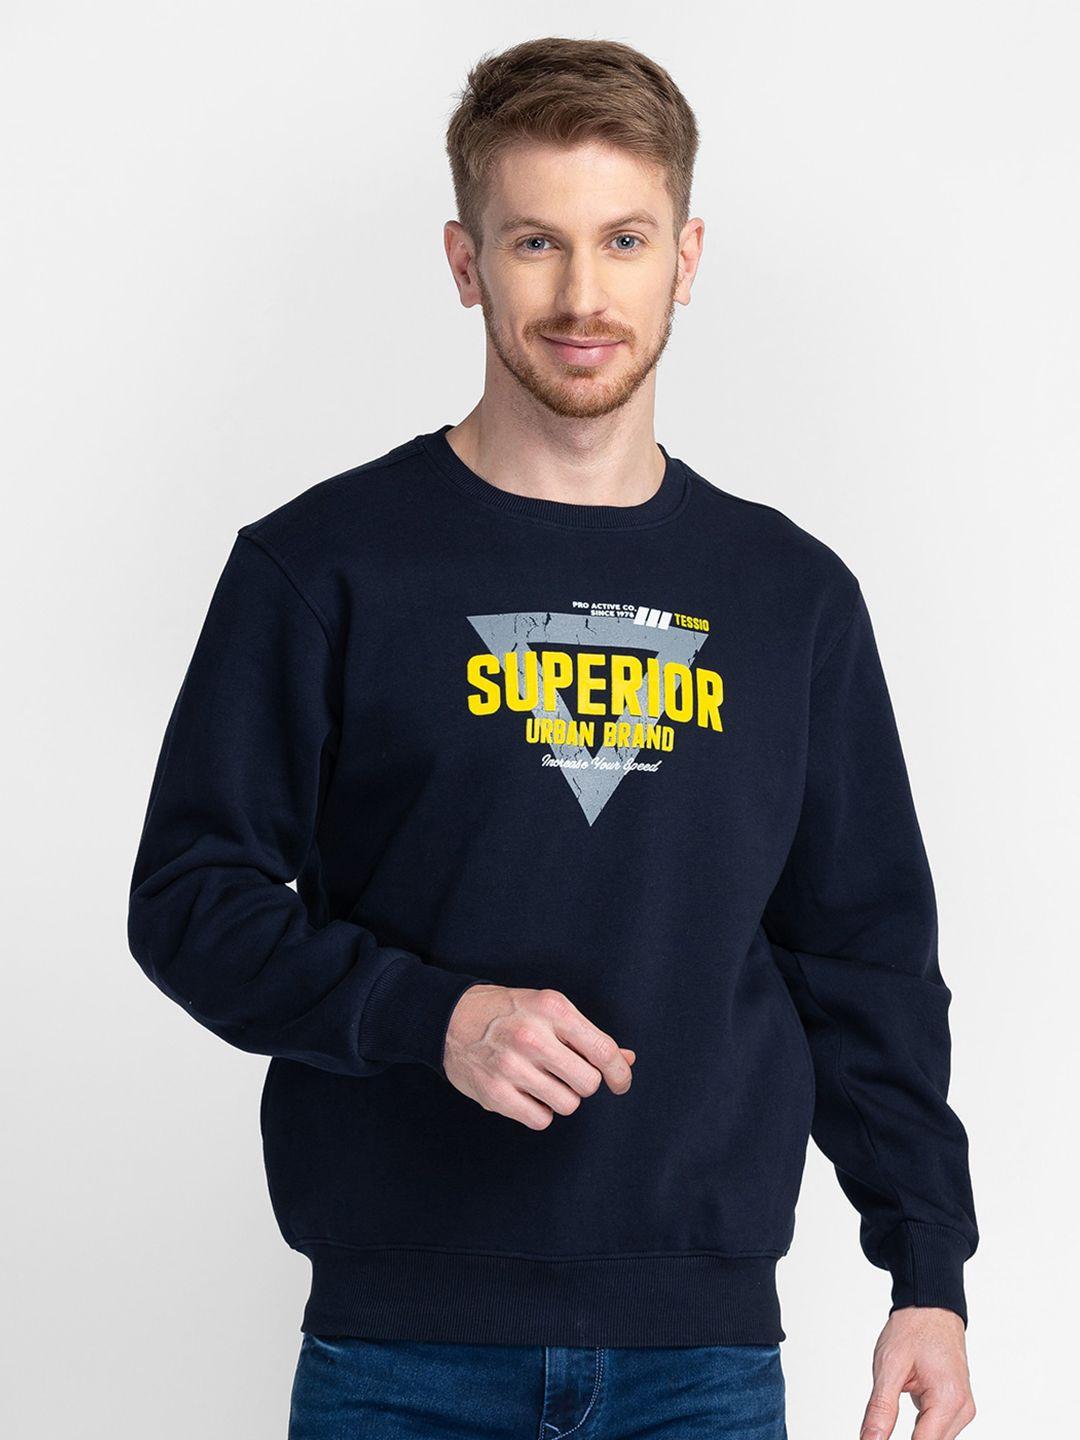 tessio-men-navy-blue-printed-sweatshirt